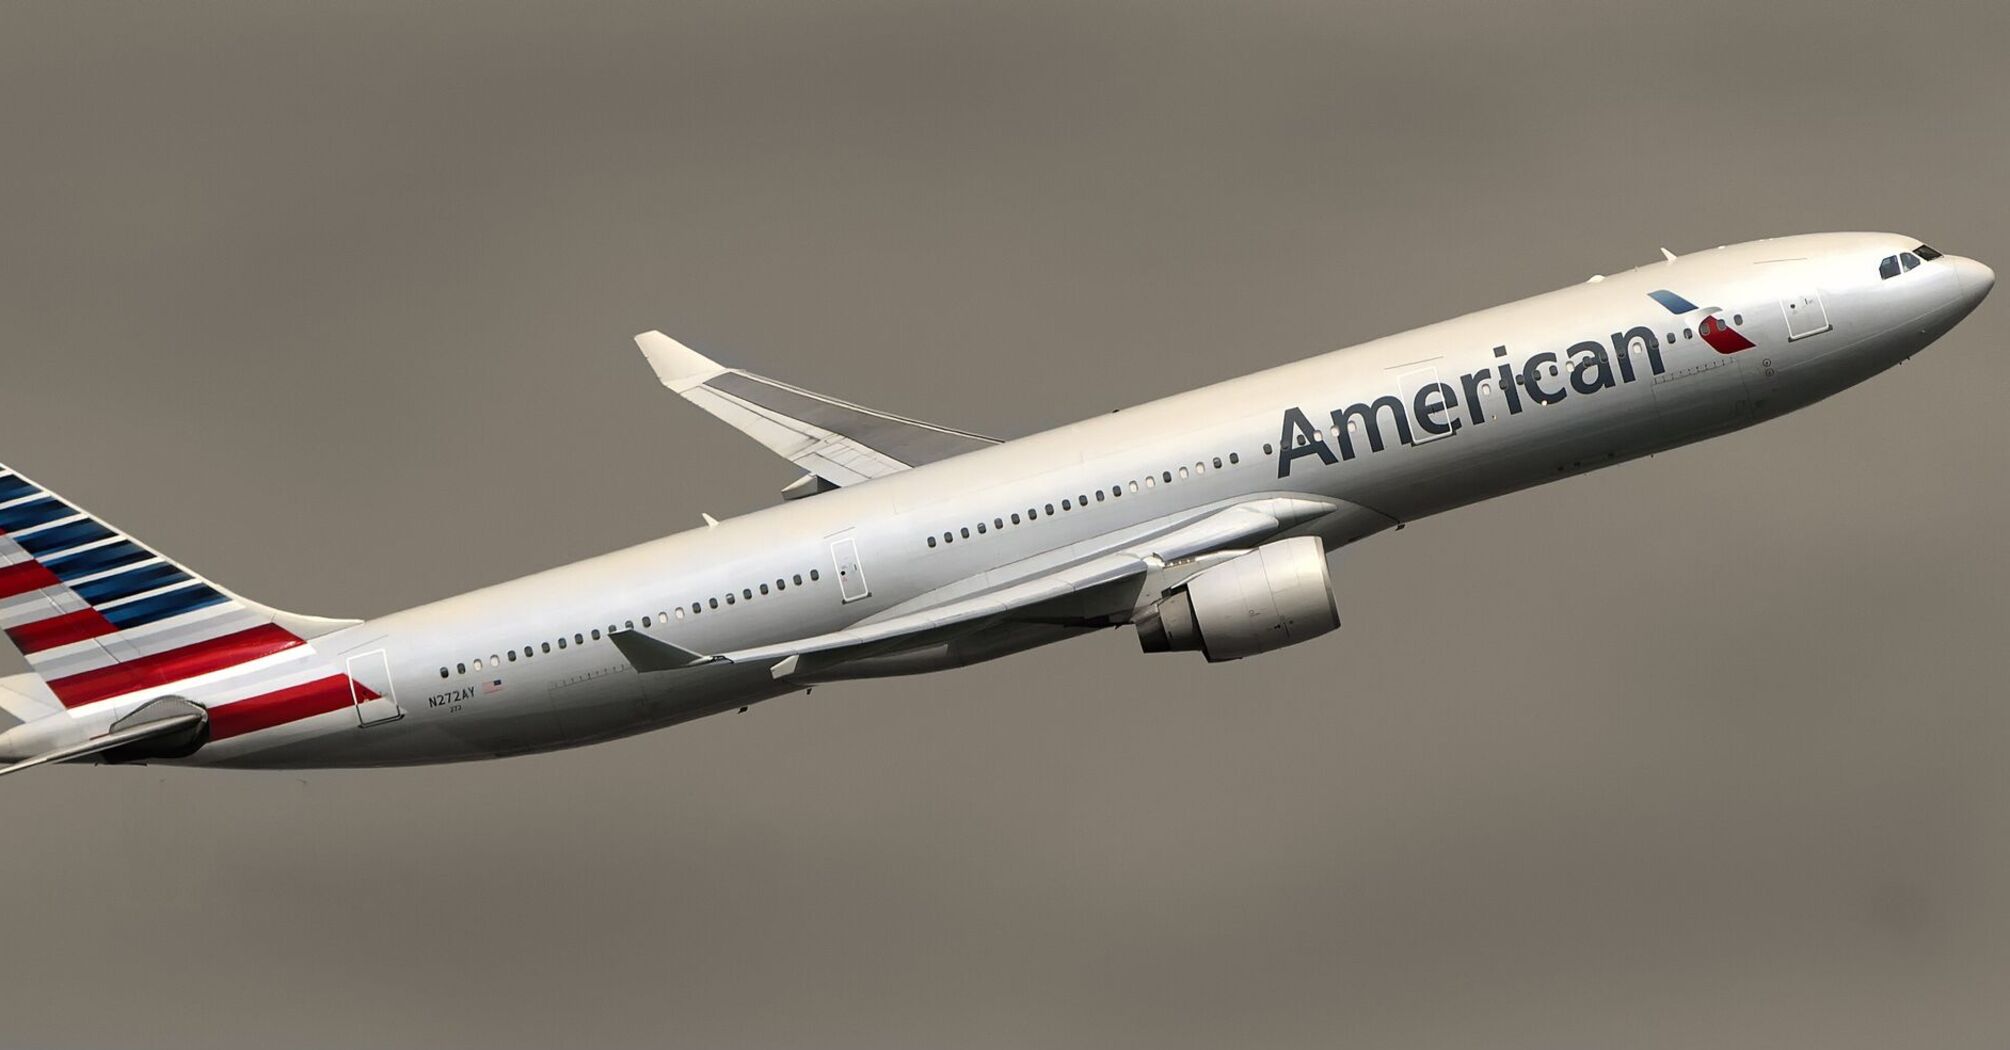 American Airline plane